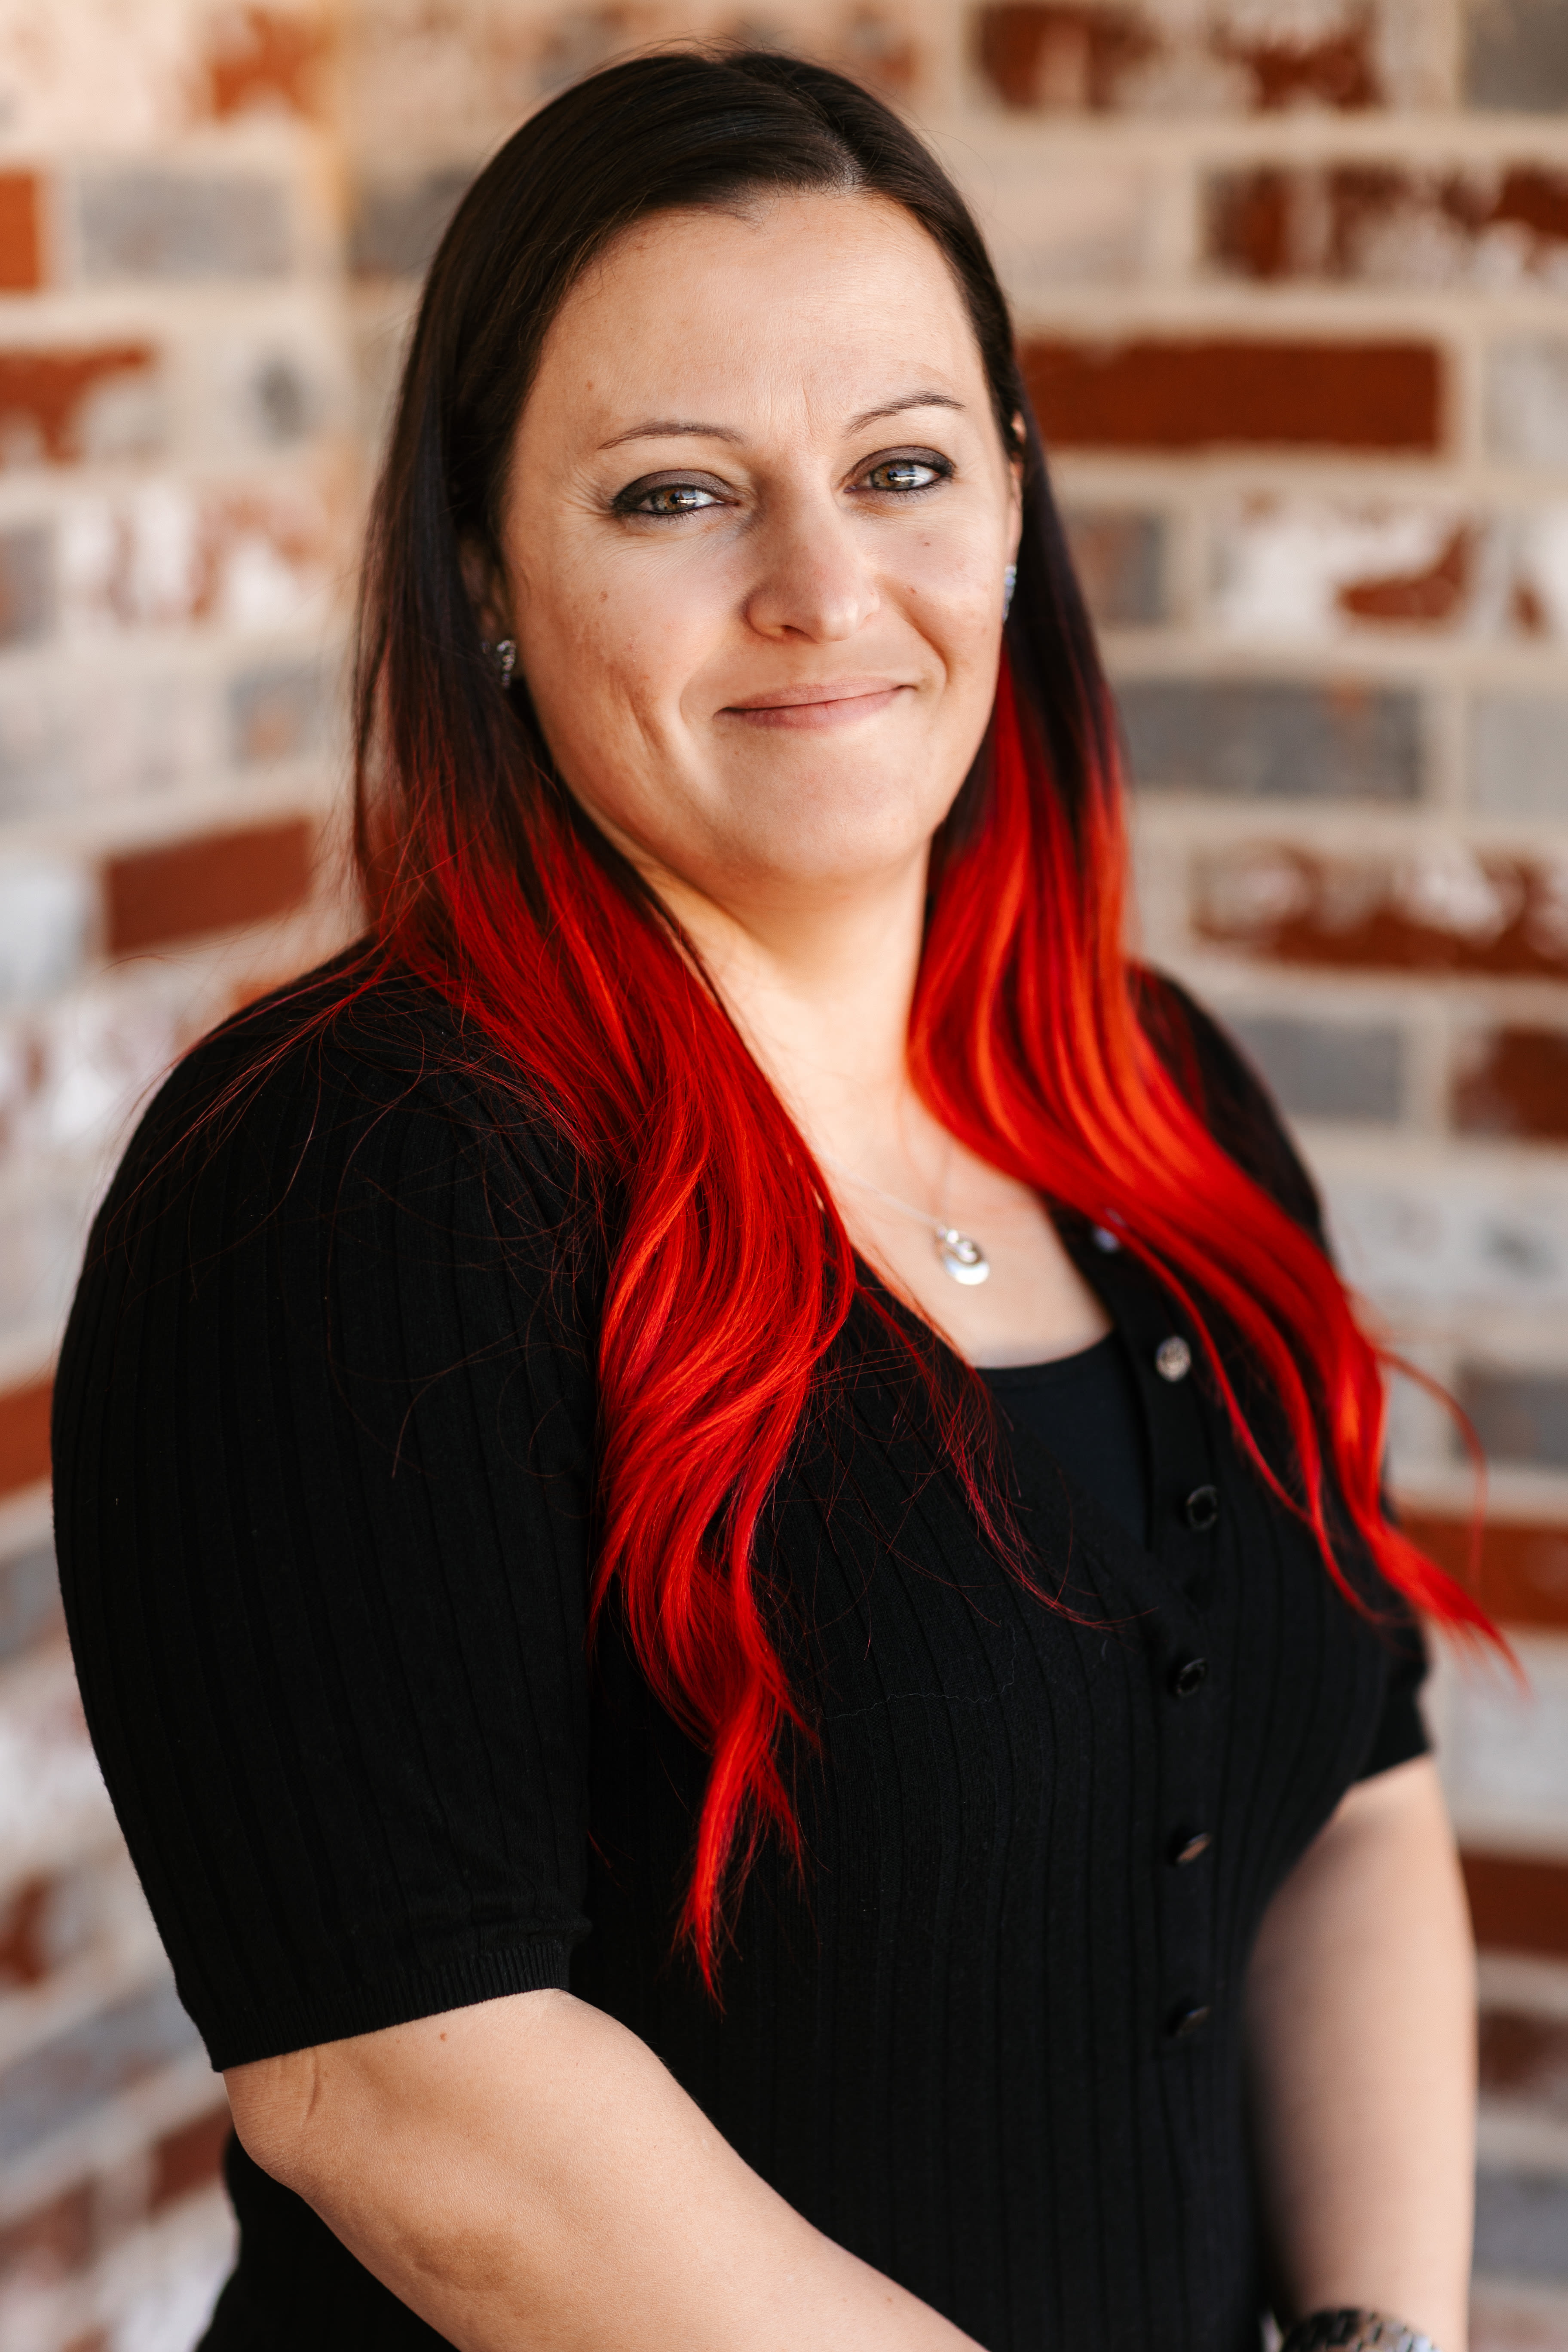 Jennifer Hughes, Assistant Regional Property Manager for S&S Property Management in Nashville, Tennessee